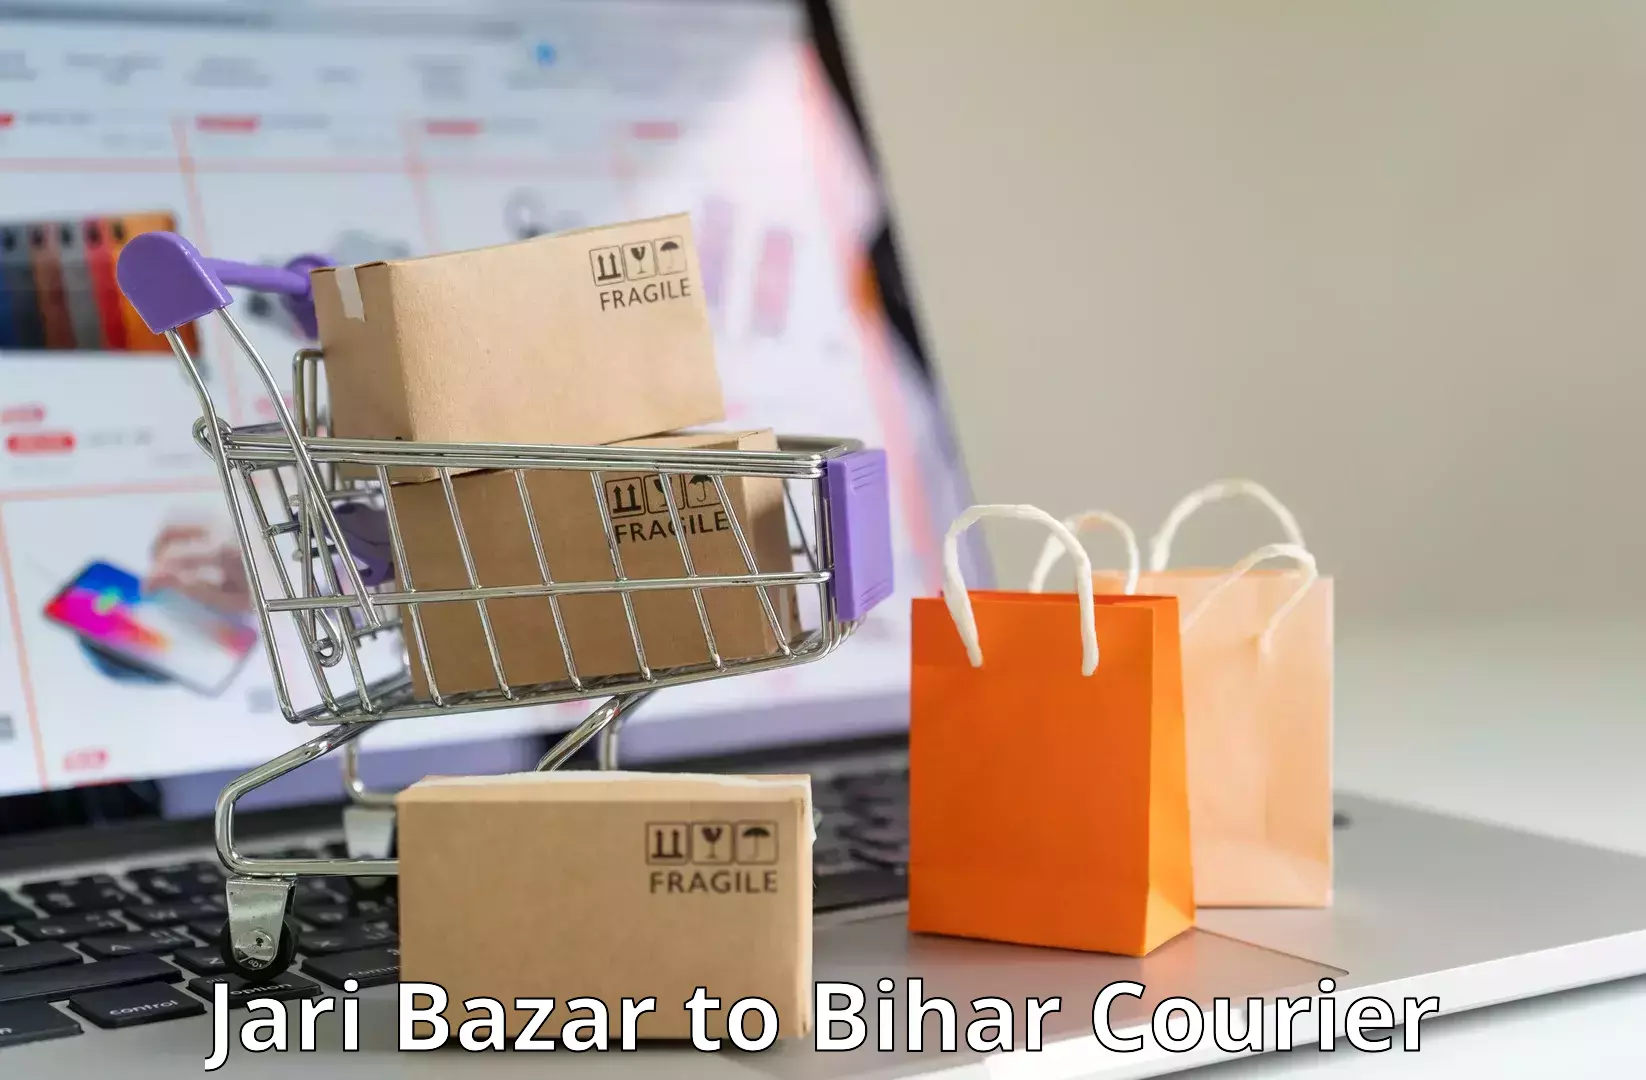 Full-service courier options Jari Bazar to Tekari